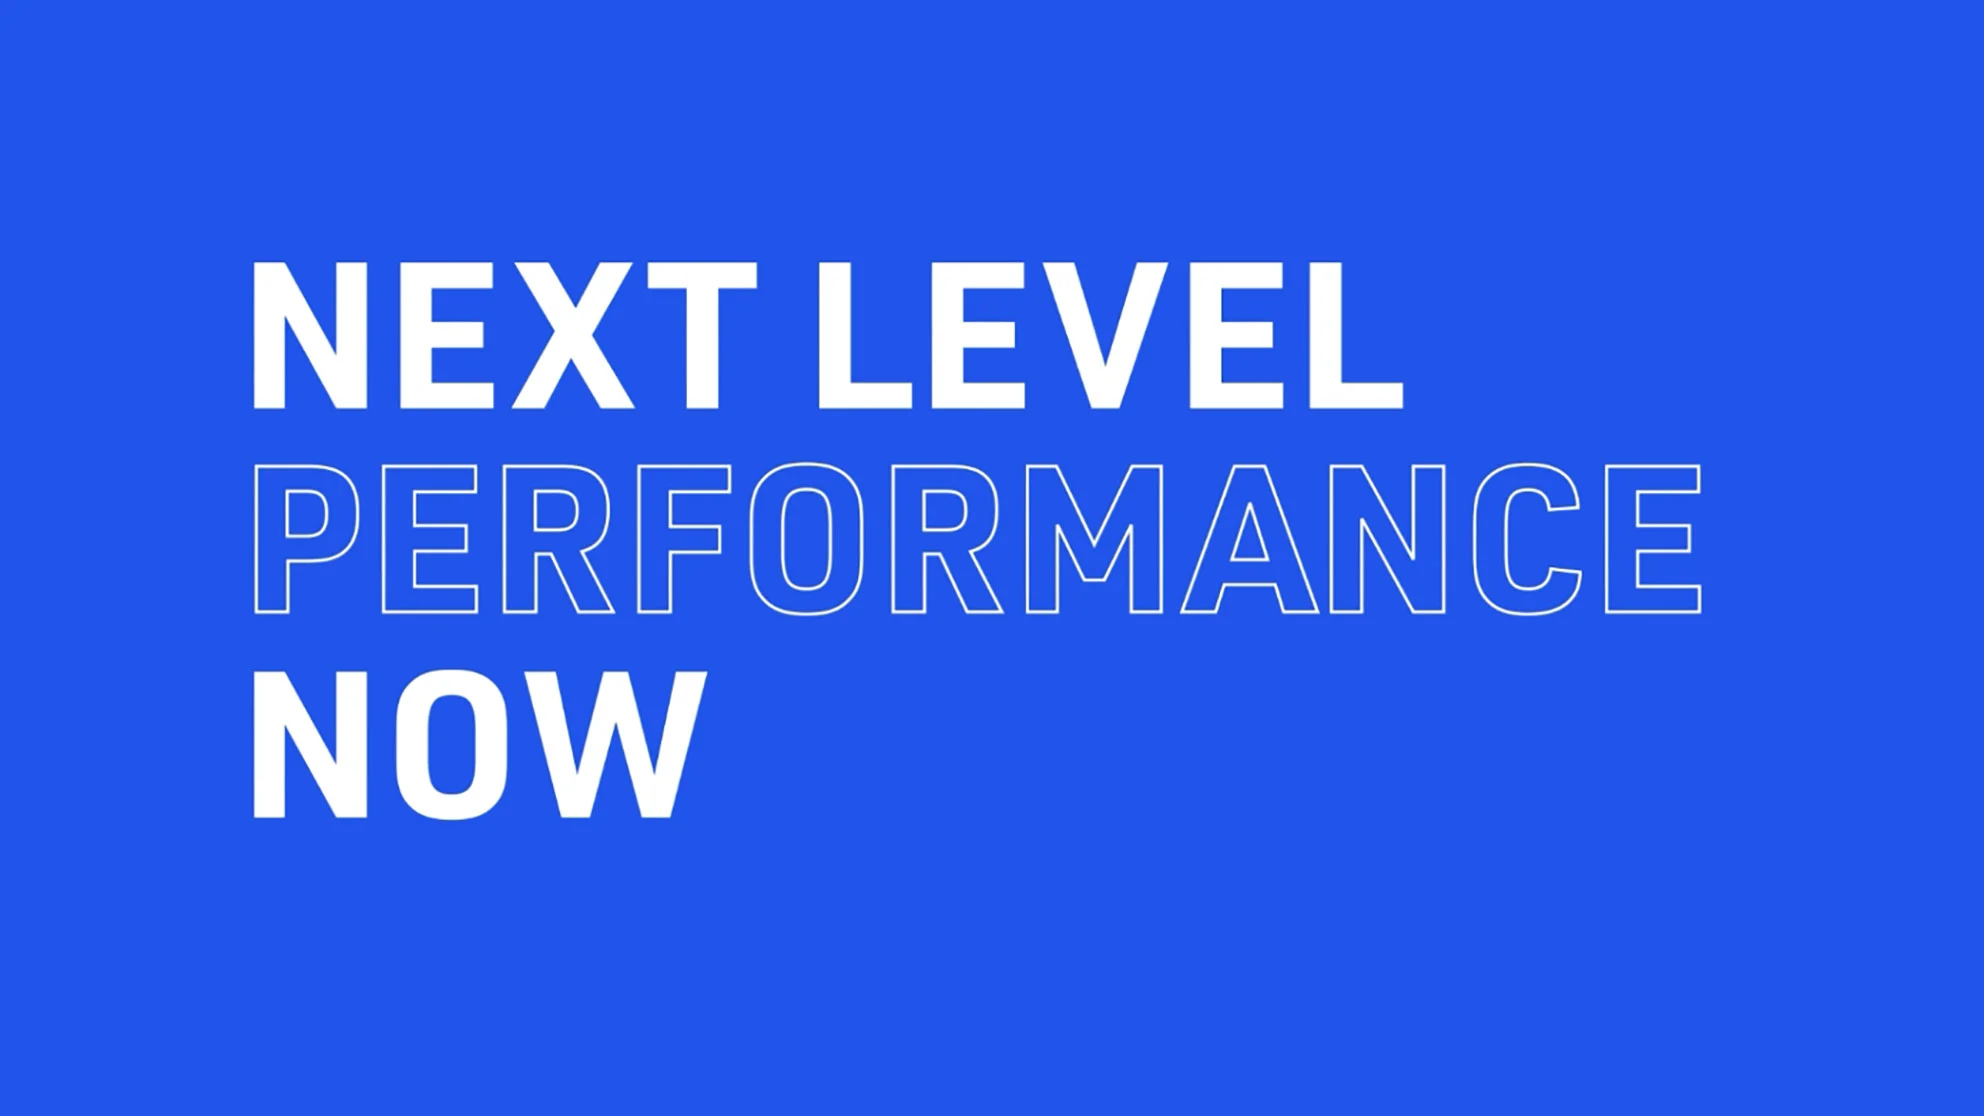 next level performance now text overlay